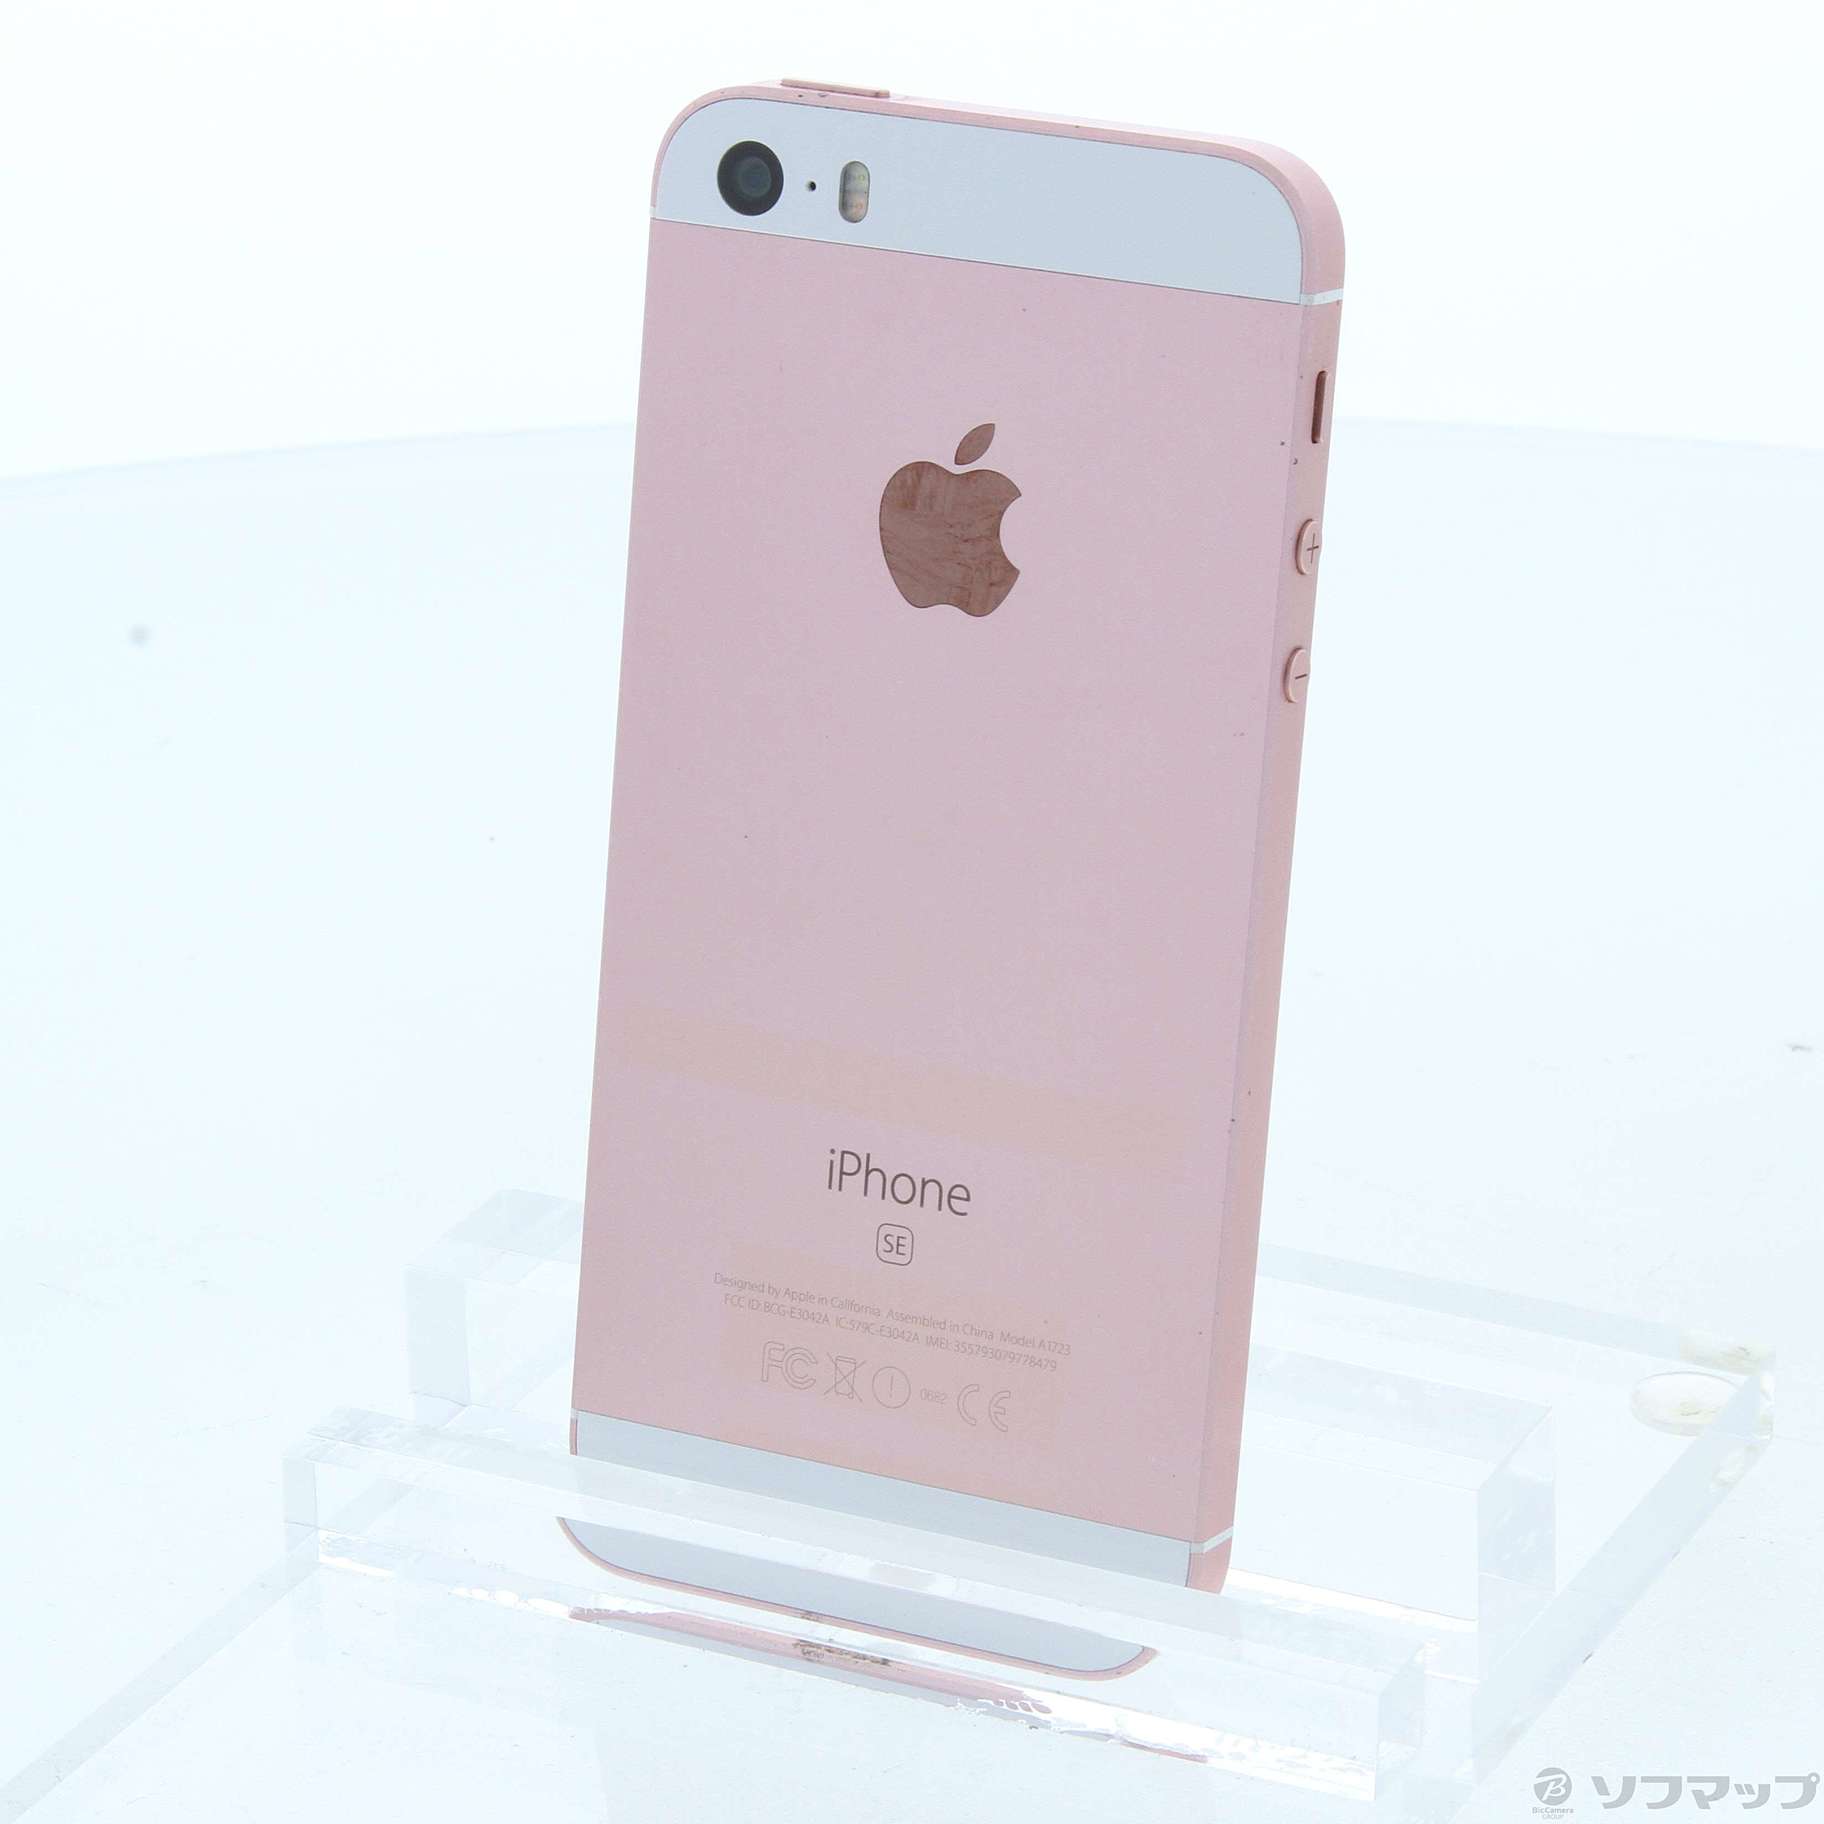 iPhone SE Gold 16 GB docomo - スマートフォン本体